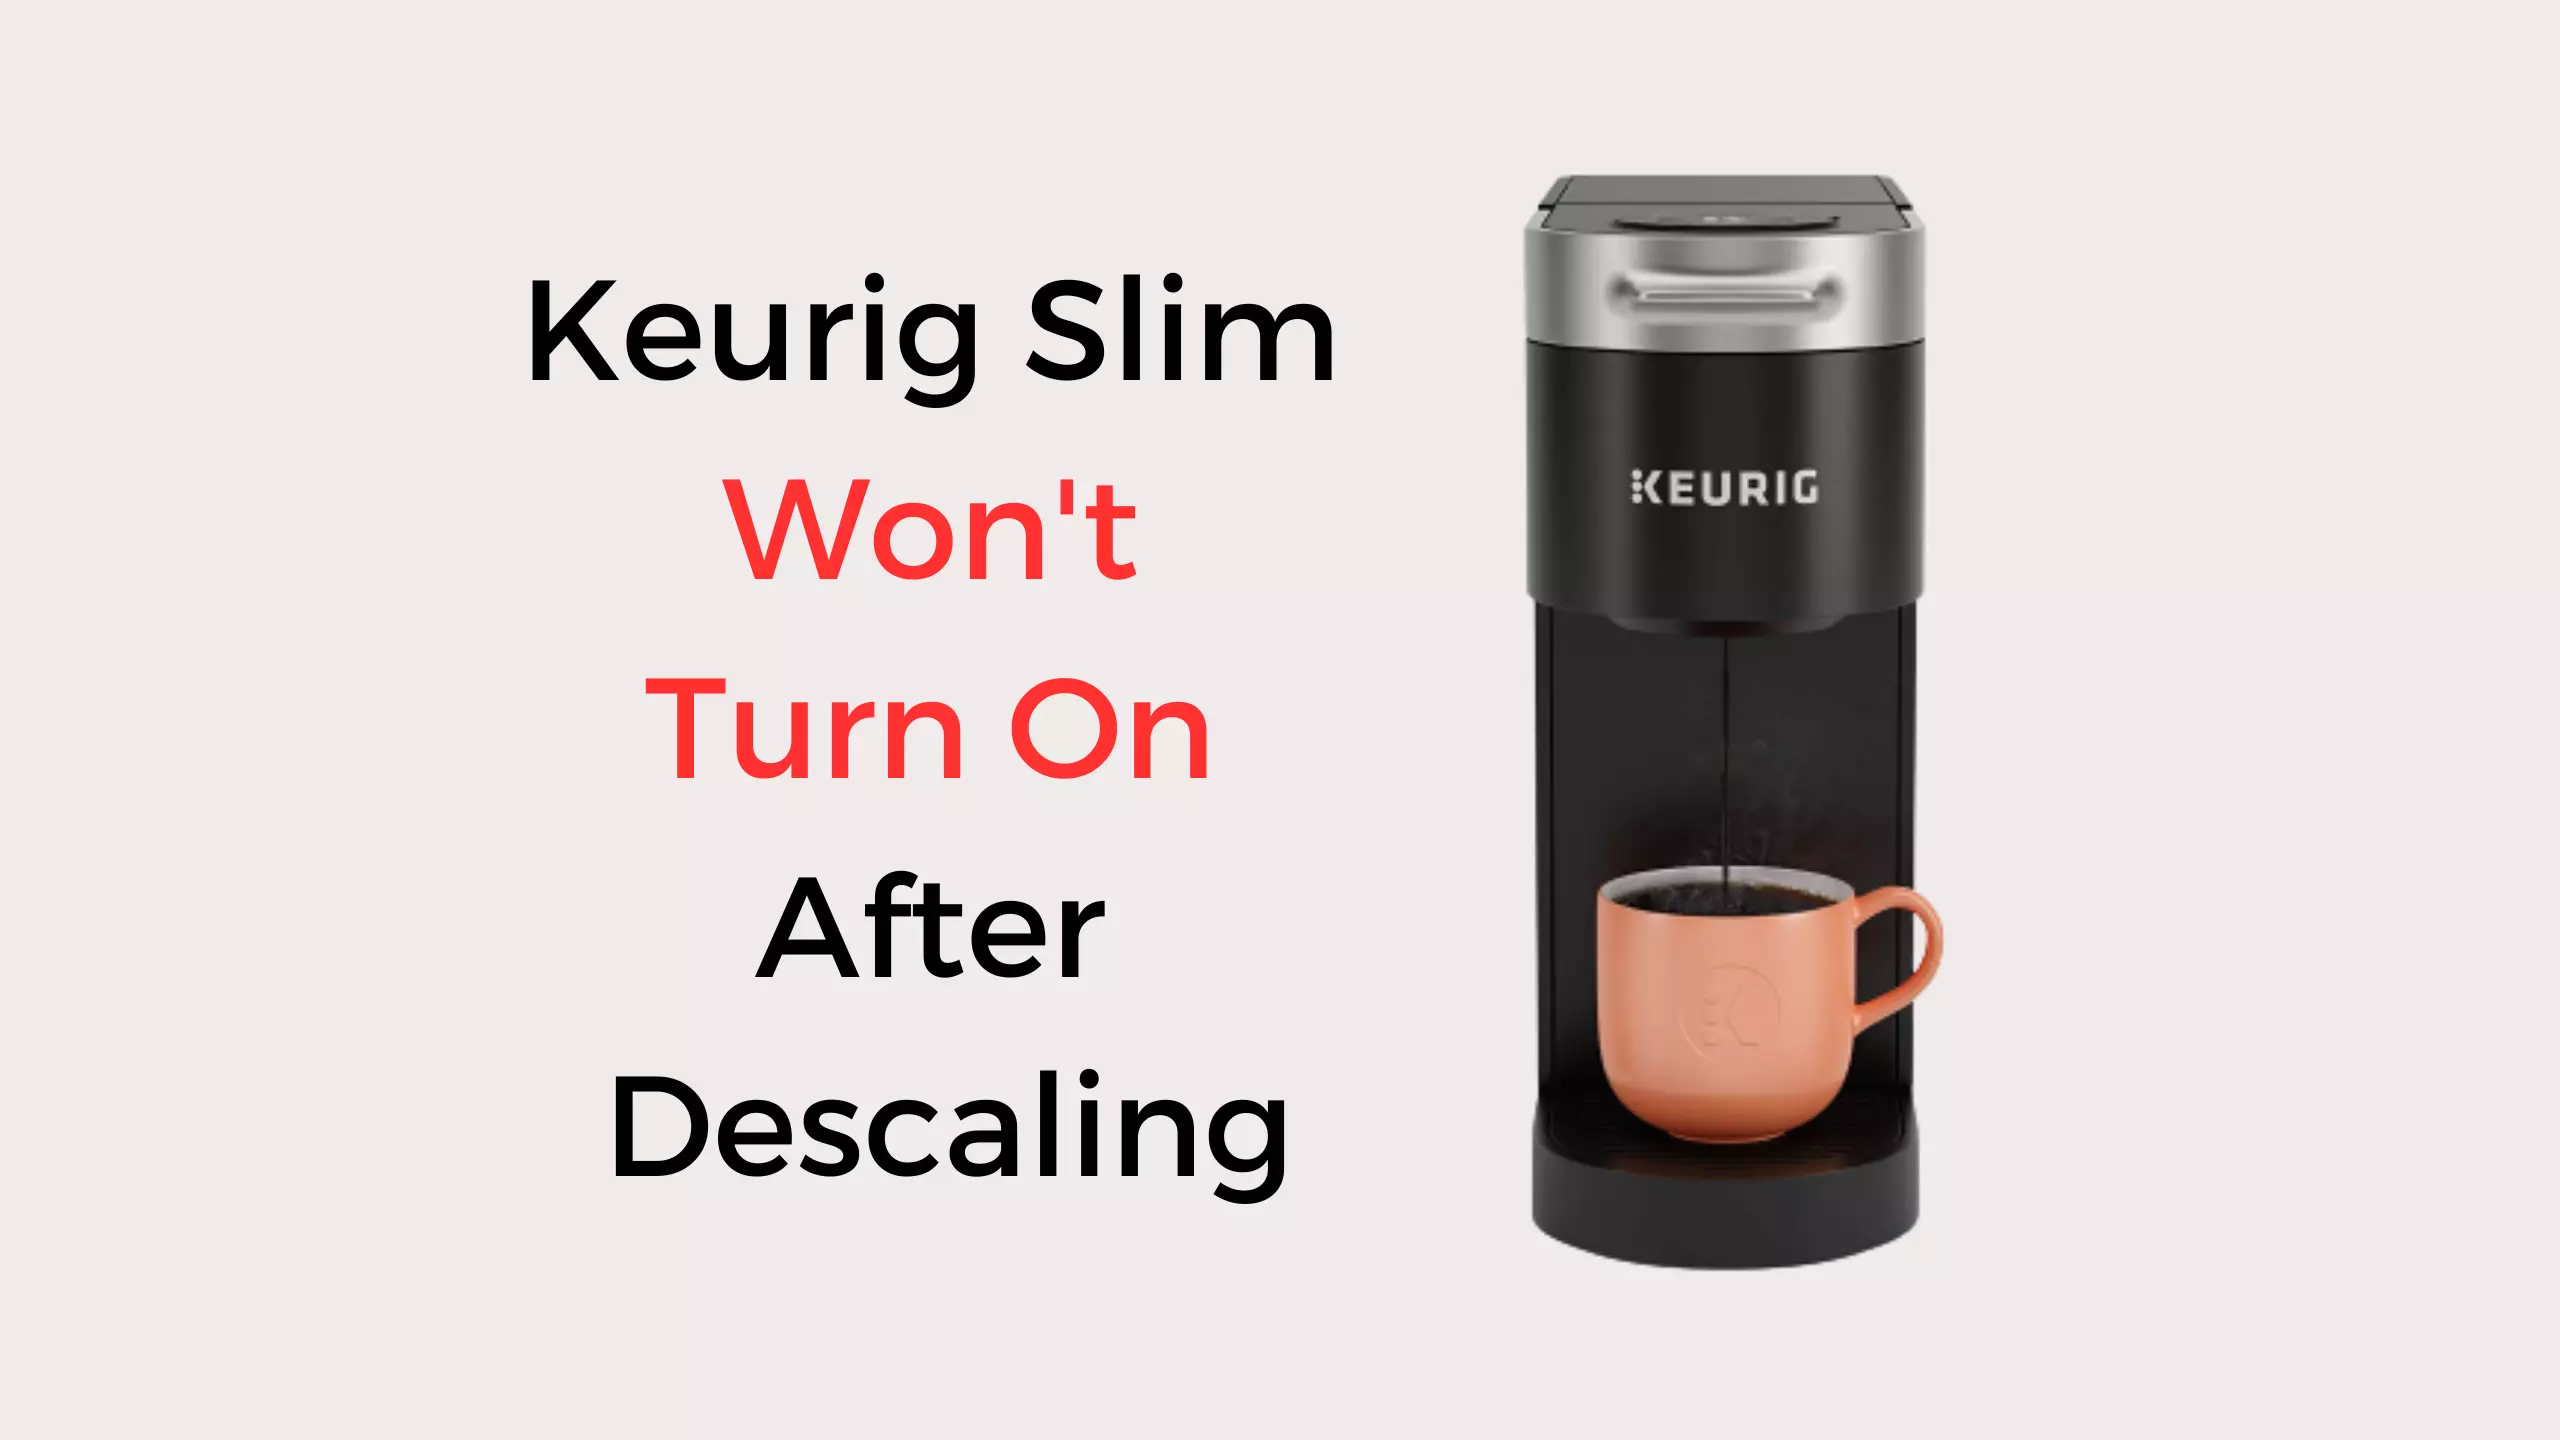 keurig slim won't turn on after descaling